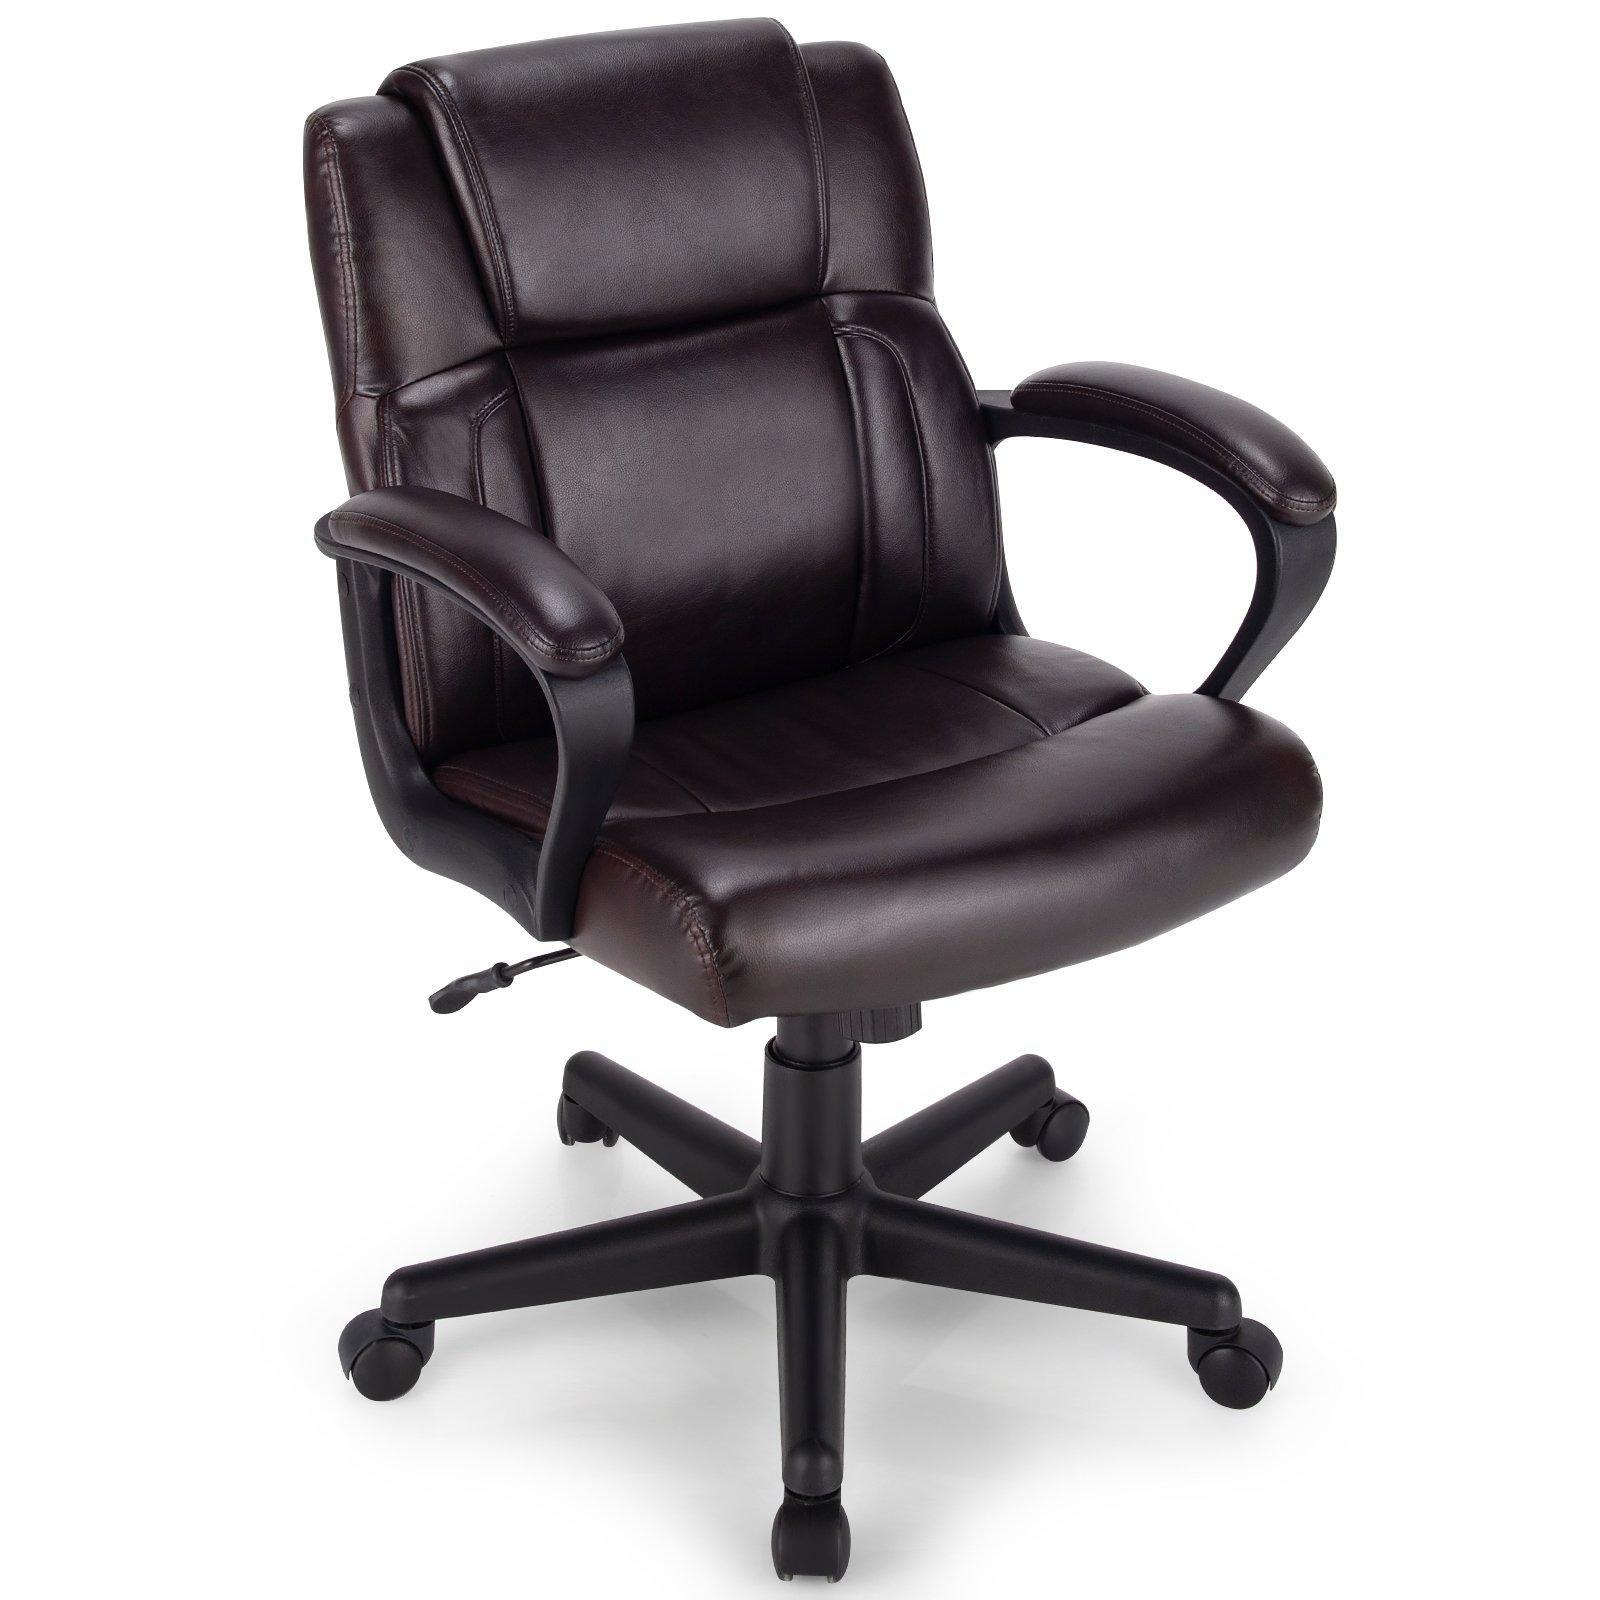 Modern Mid Back Office Chair Swivel Chair w/ Wheels Computer Desk Chair - image 1